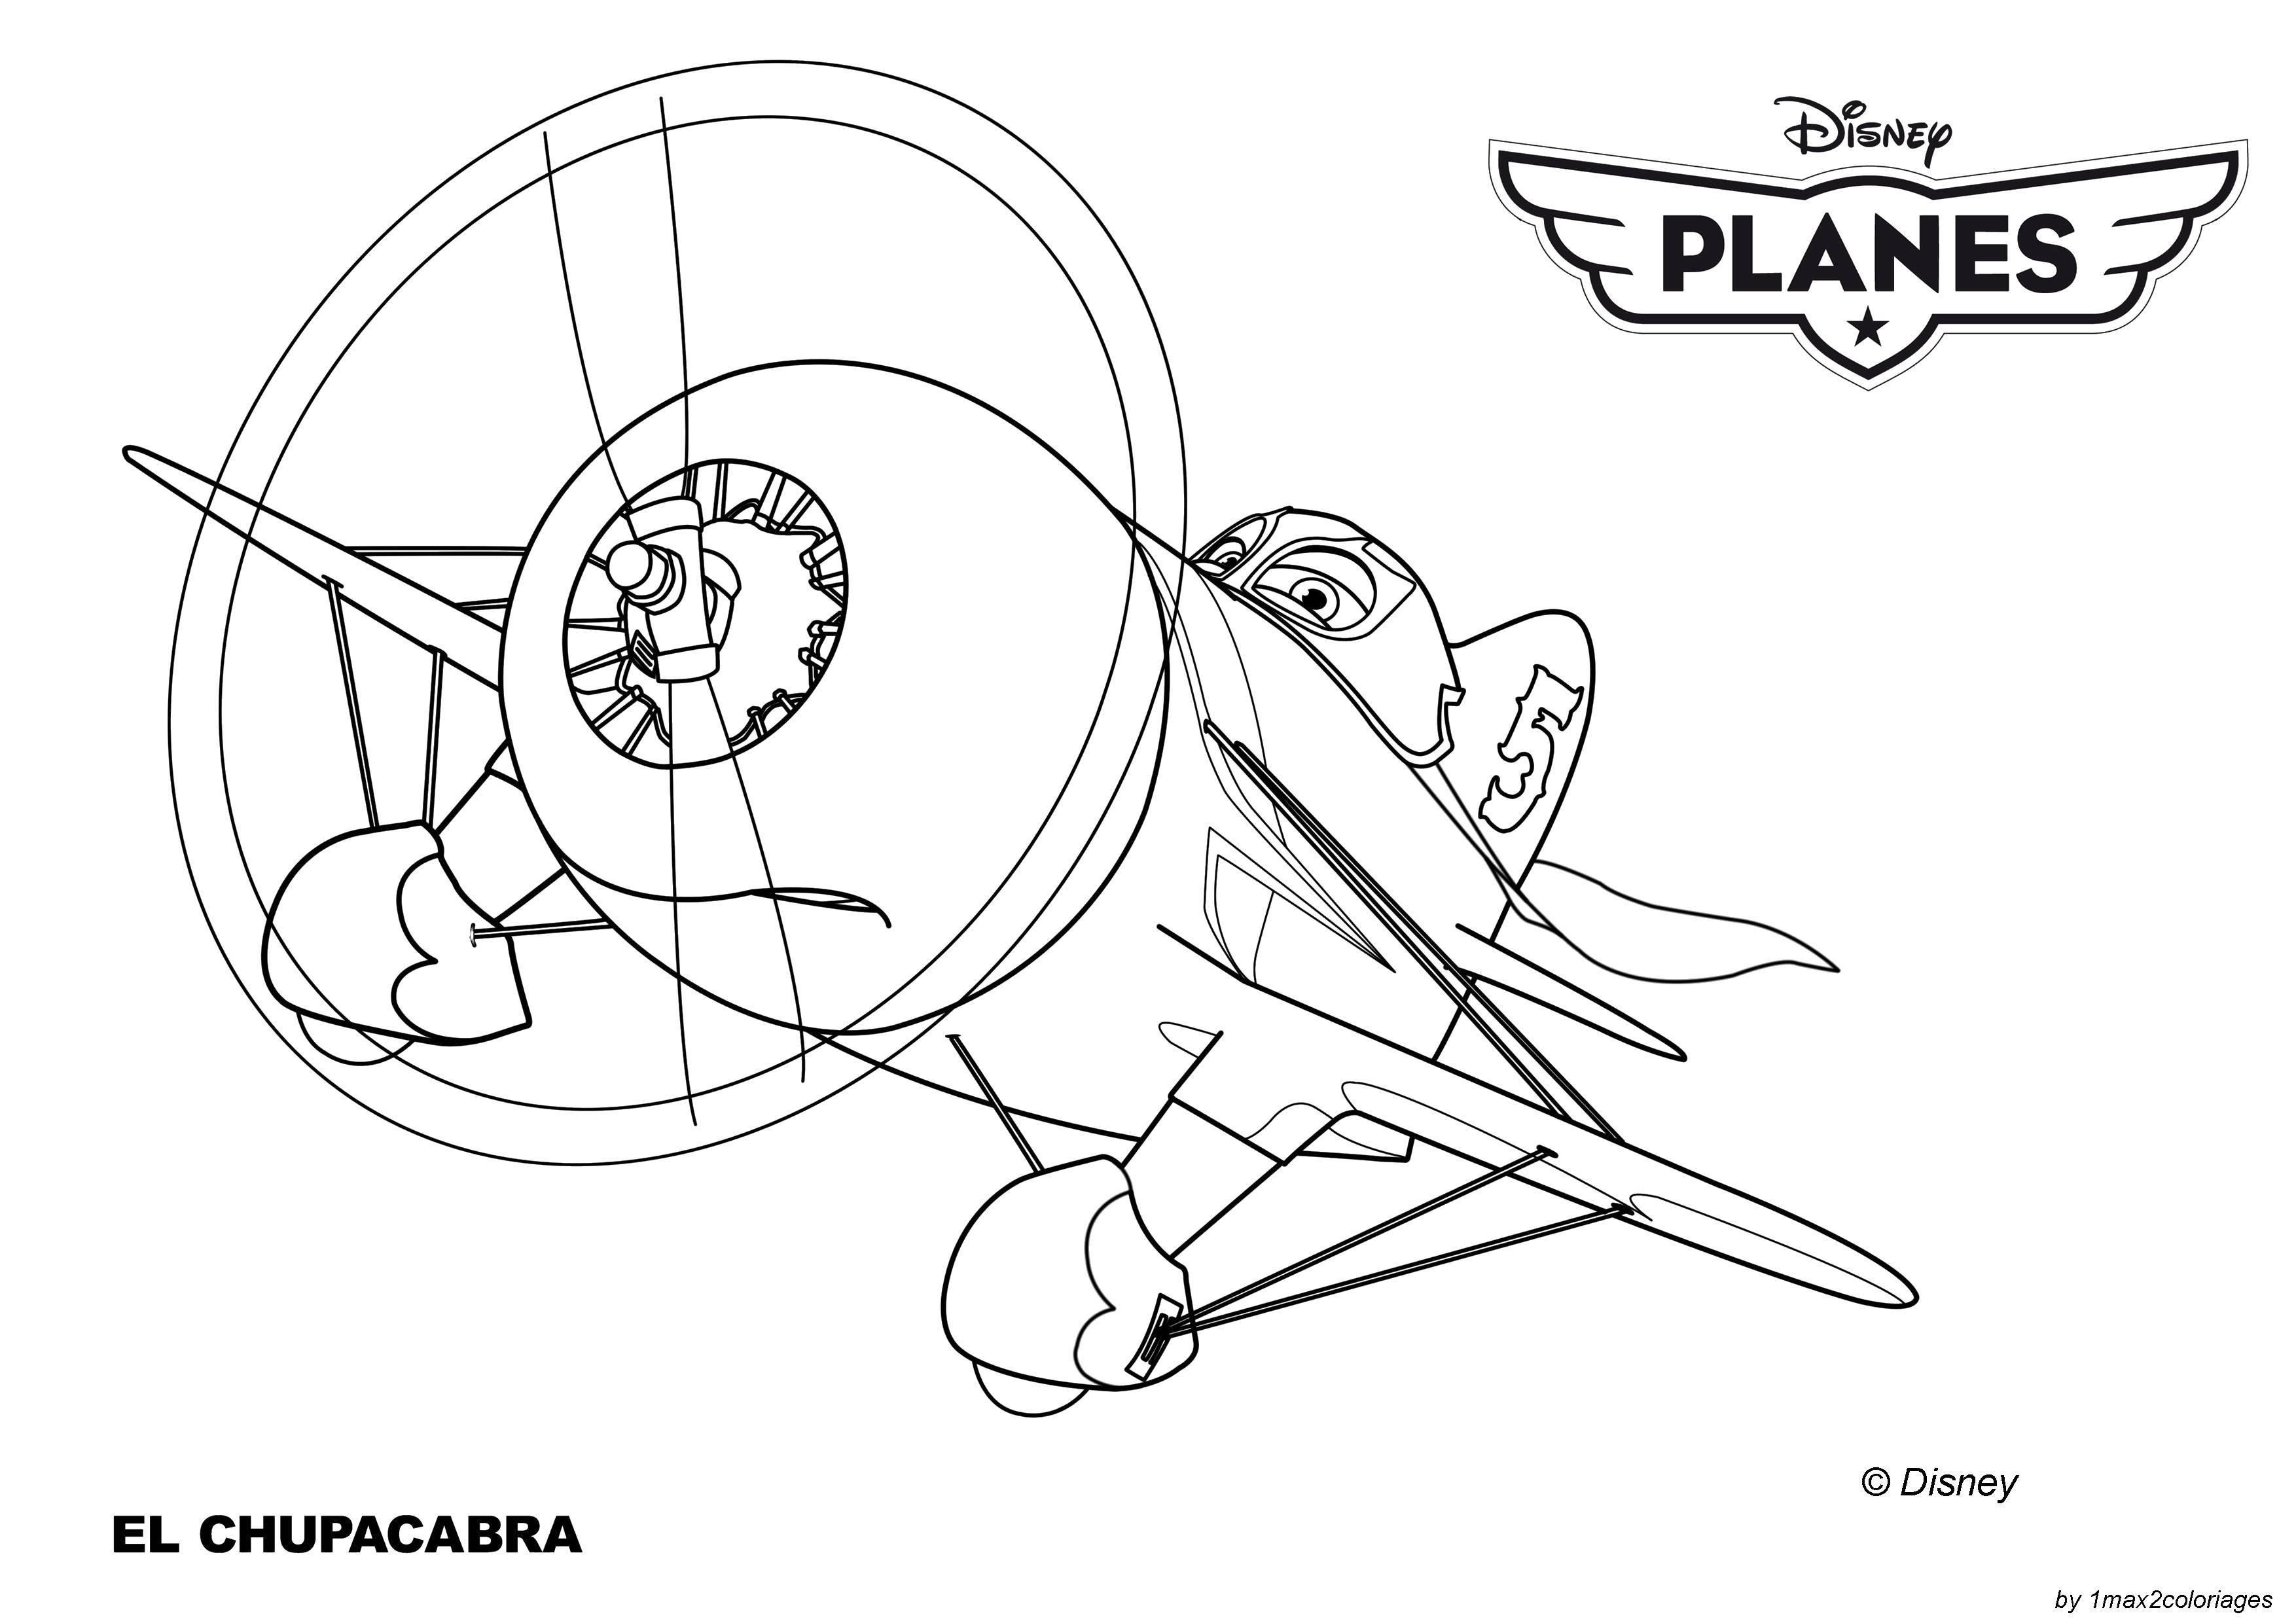 Coloring El Chupacabra. Category The planes. Tags:  Cartoon character.